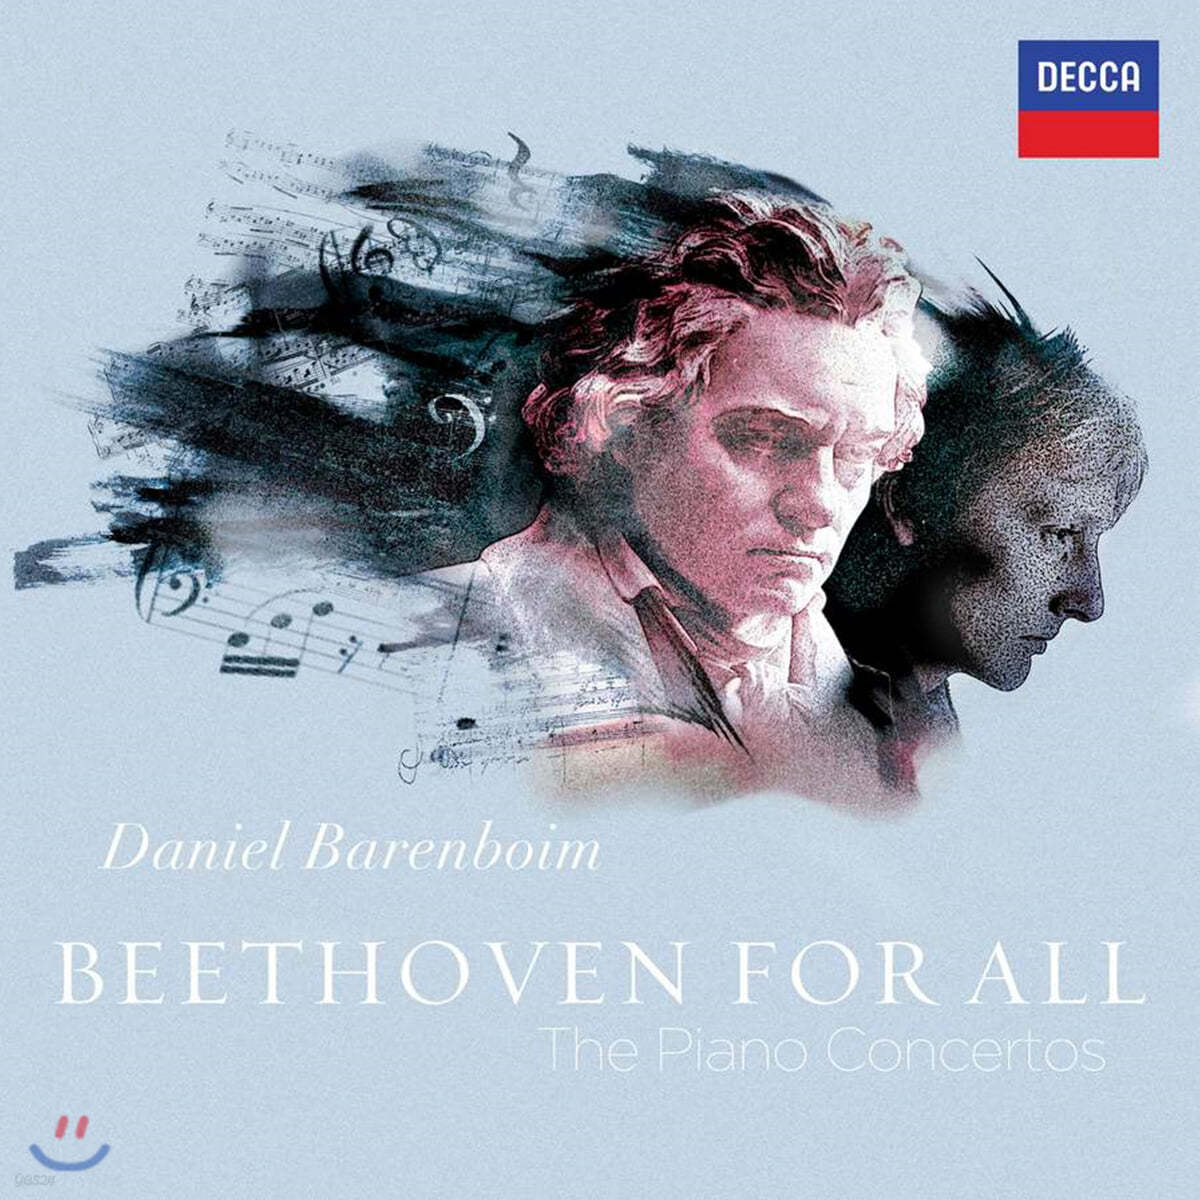 Daniel Barenboim 베토벤: 피아노 협주곡 전곡 (Beethoven For All - The Piano Concertos)